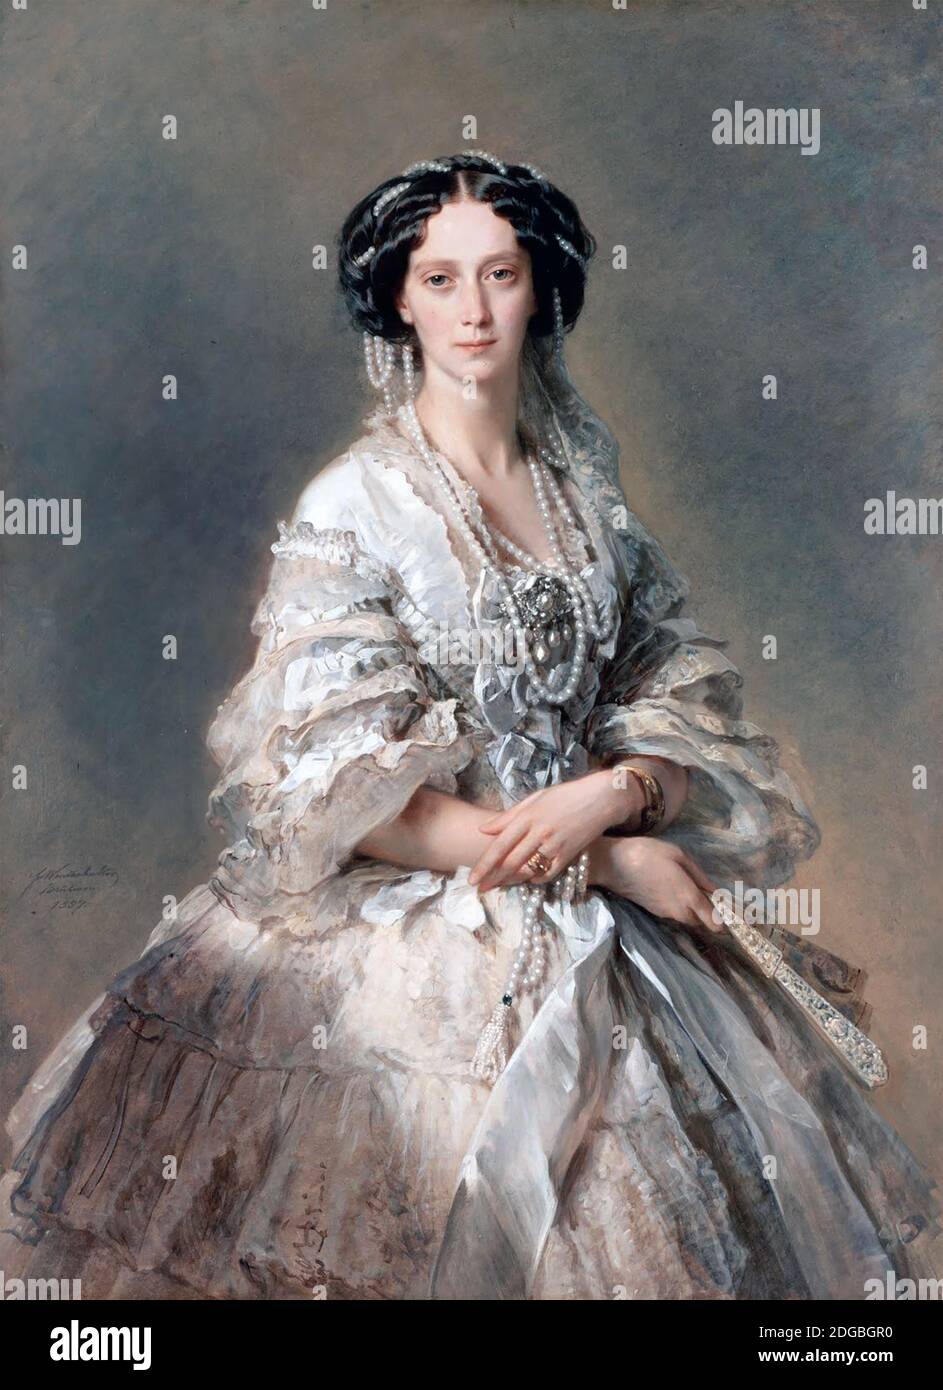 MARIA ALEXANDROVNA - Marie de Hesse (1824-1880) Emperatriz de Rusia, esposa de Alejandro II, por Ivan Makarov (cropped) Foto de stock